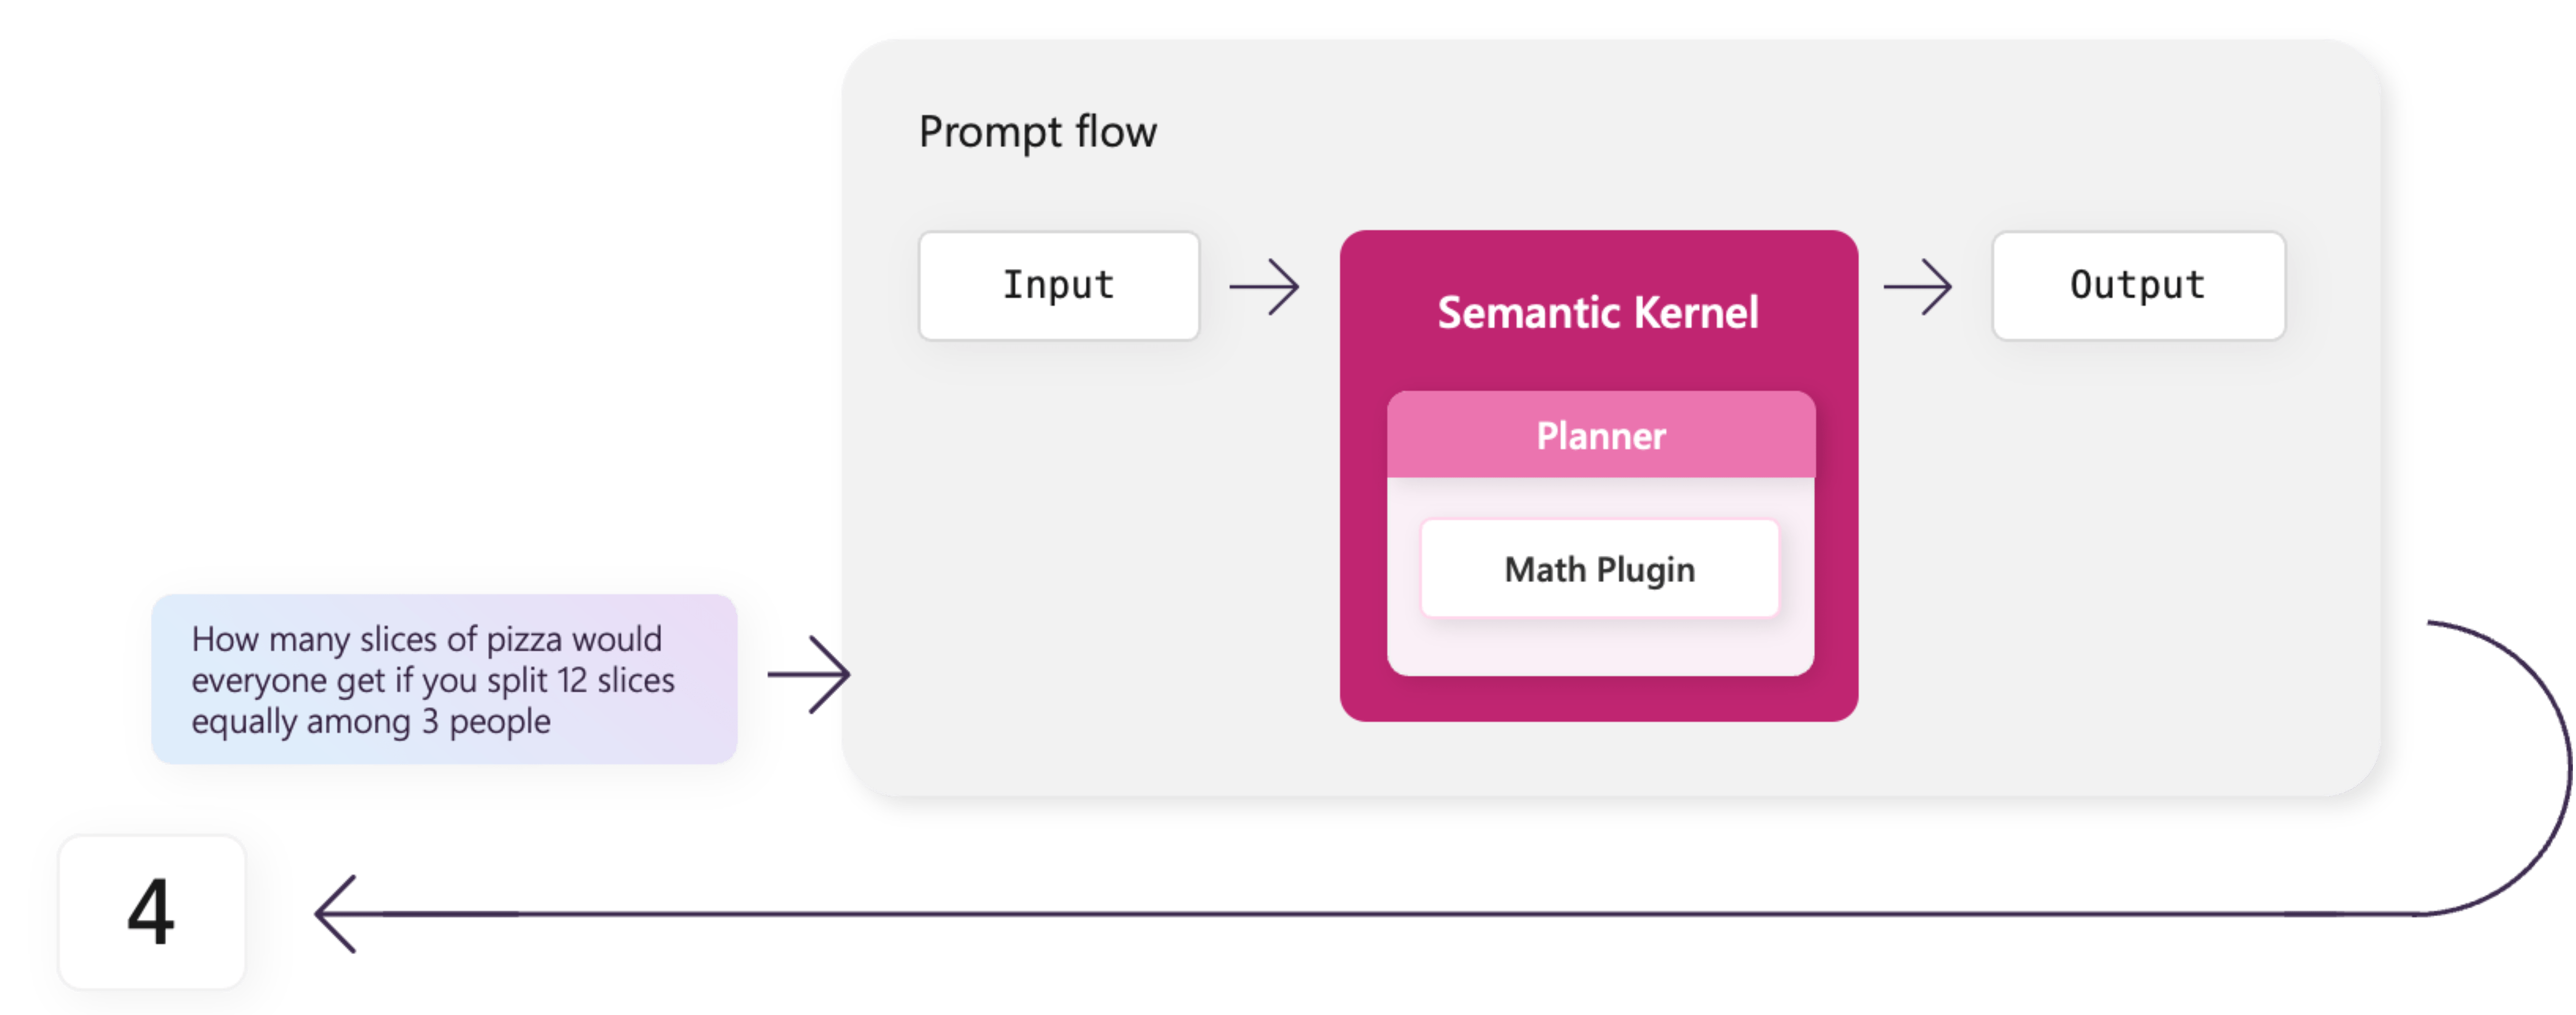 Semantic Kernel running inside of Prompt flow